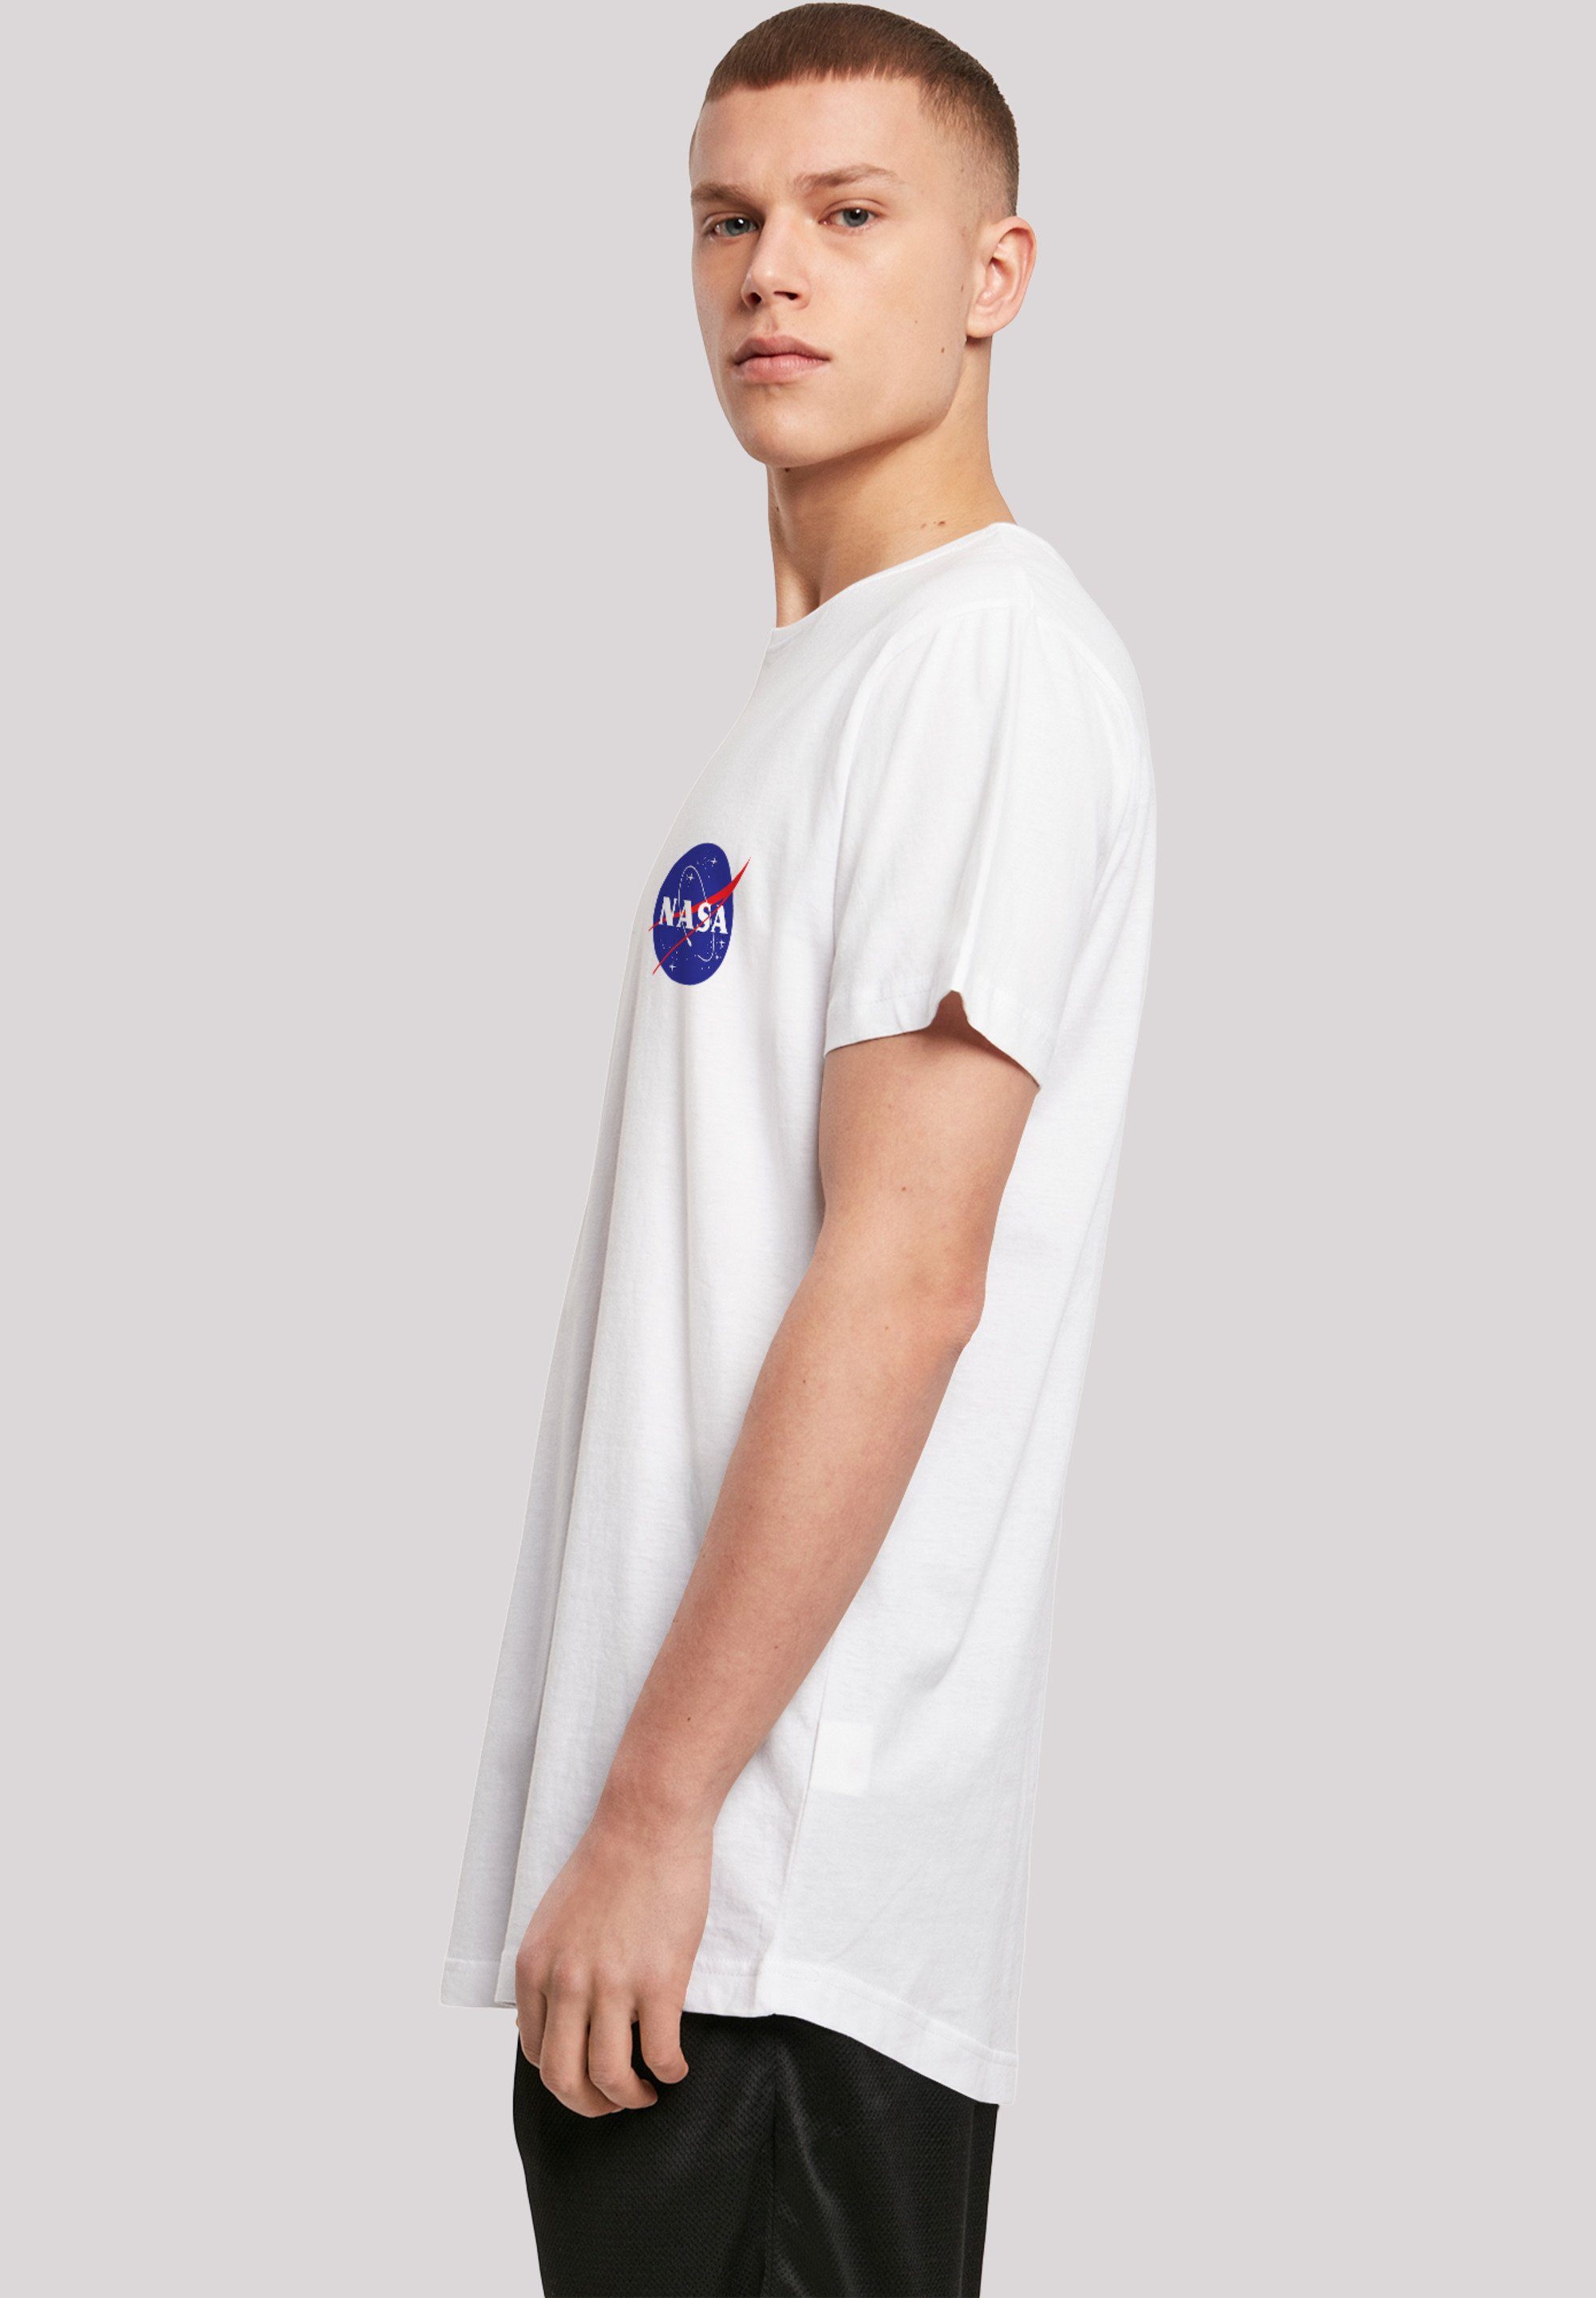 F4NT4STIC NASA Classic Logo Insignia Herren,Premium Chest White Merch,Lang,Longshirt,Bedruckt T-Shirt